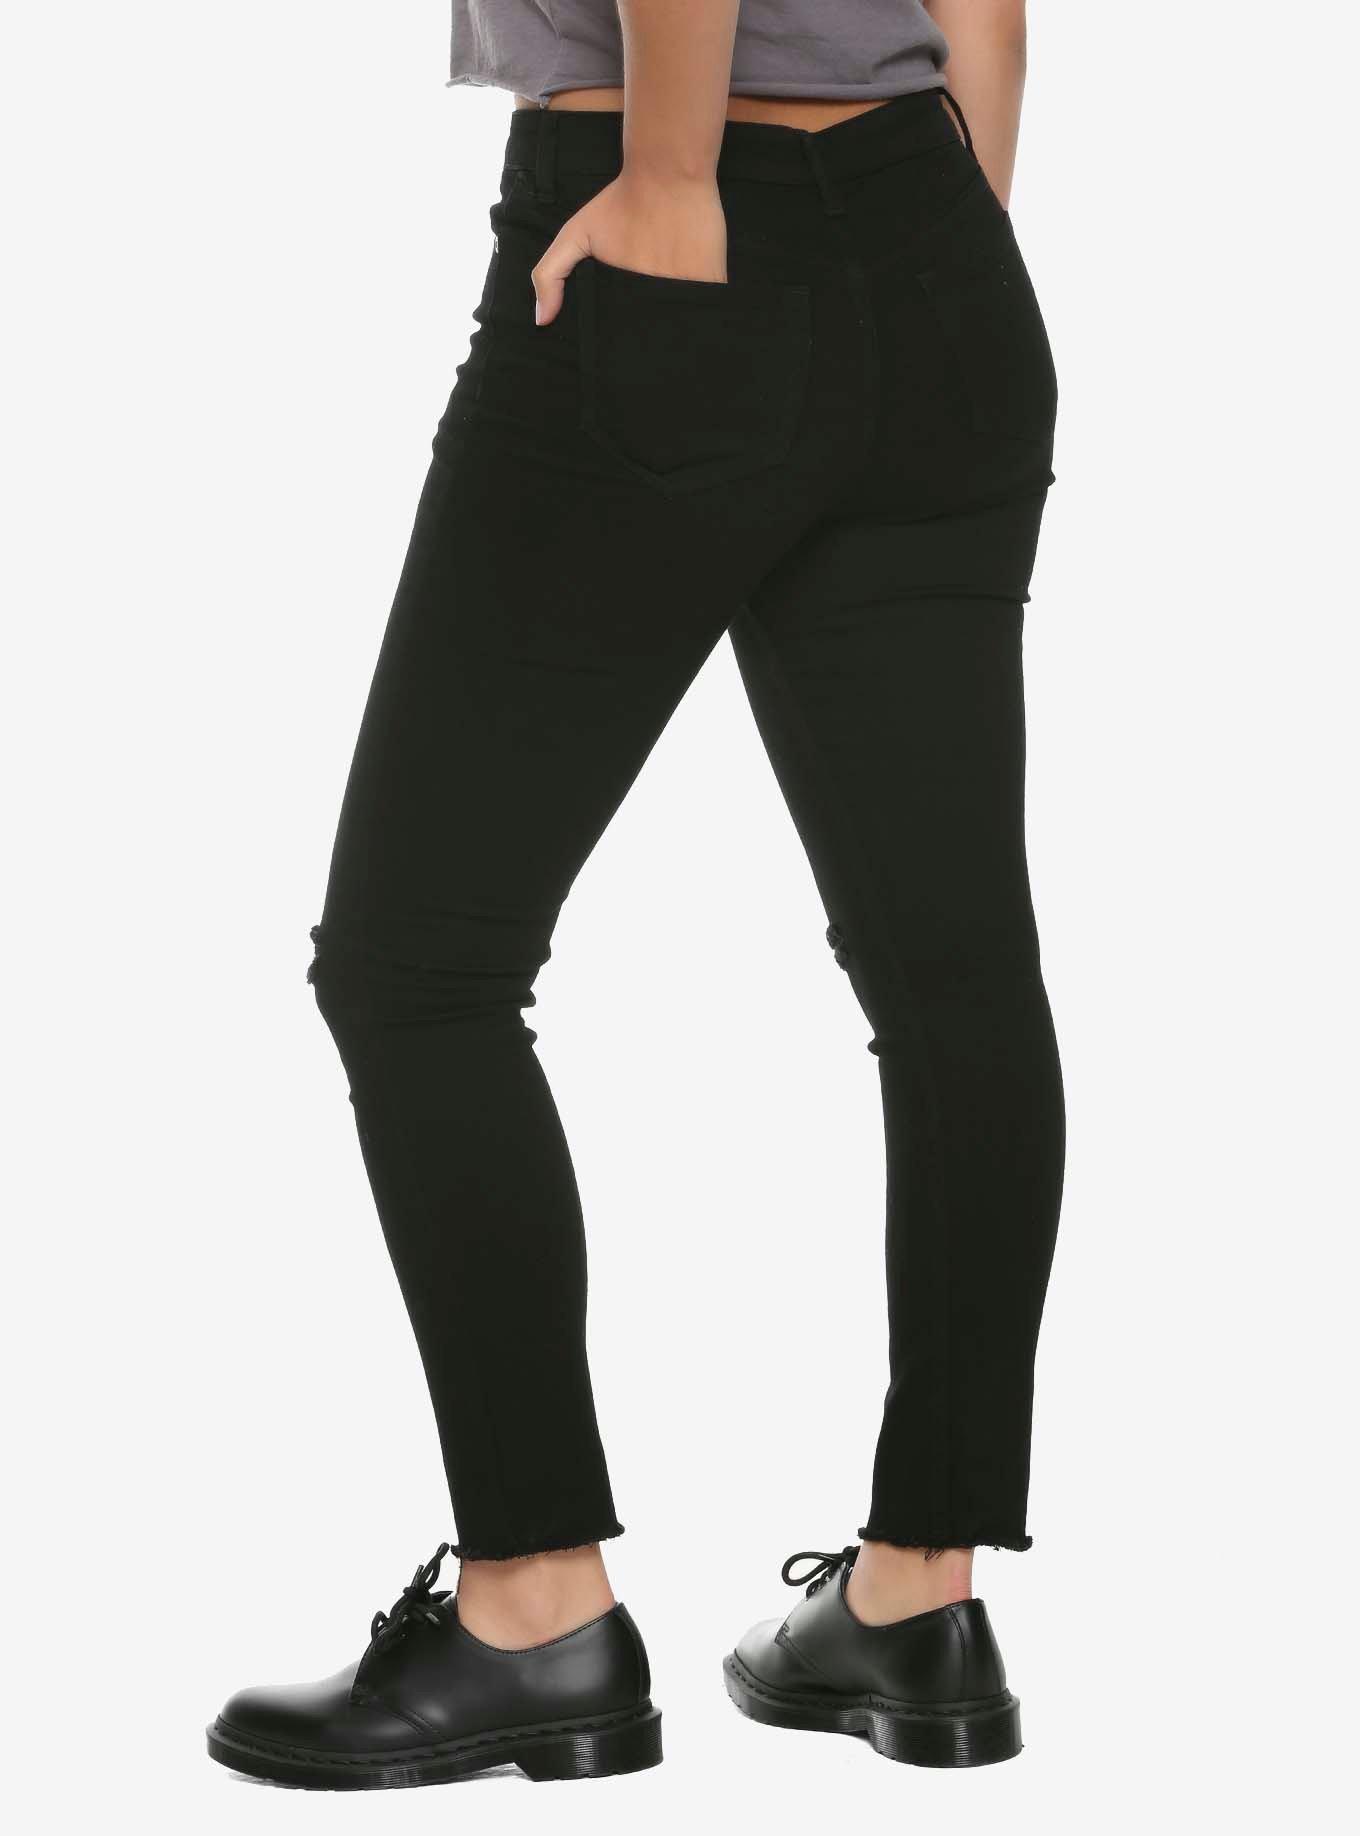 HT Denim Black Knee Slits Low-Rise Skinny Jeans, BLACK, alternate